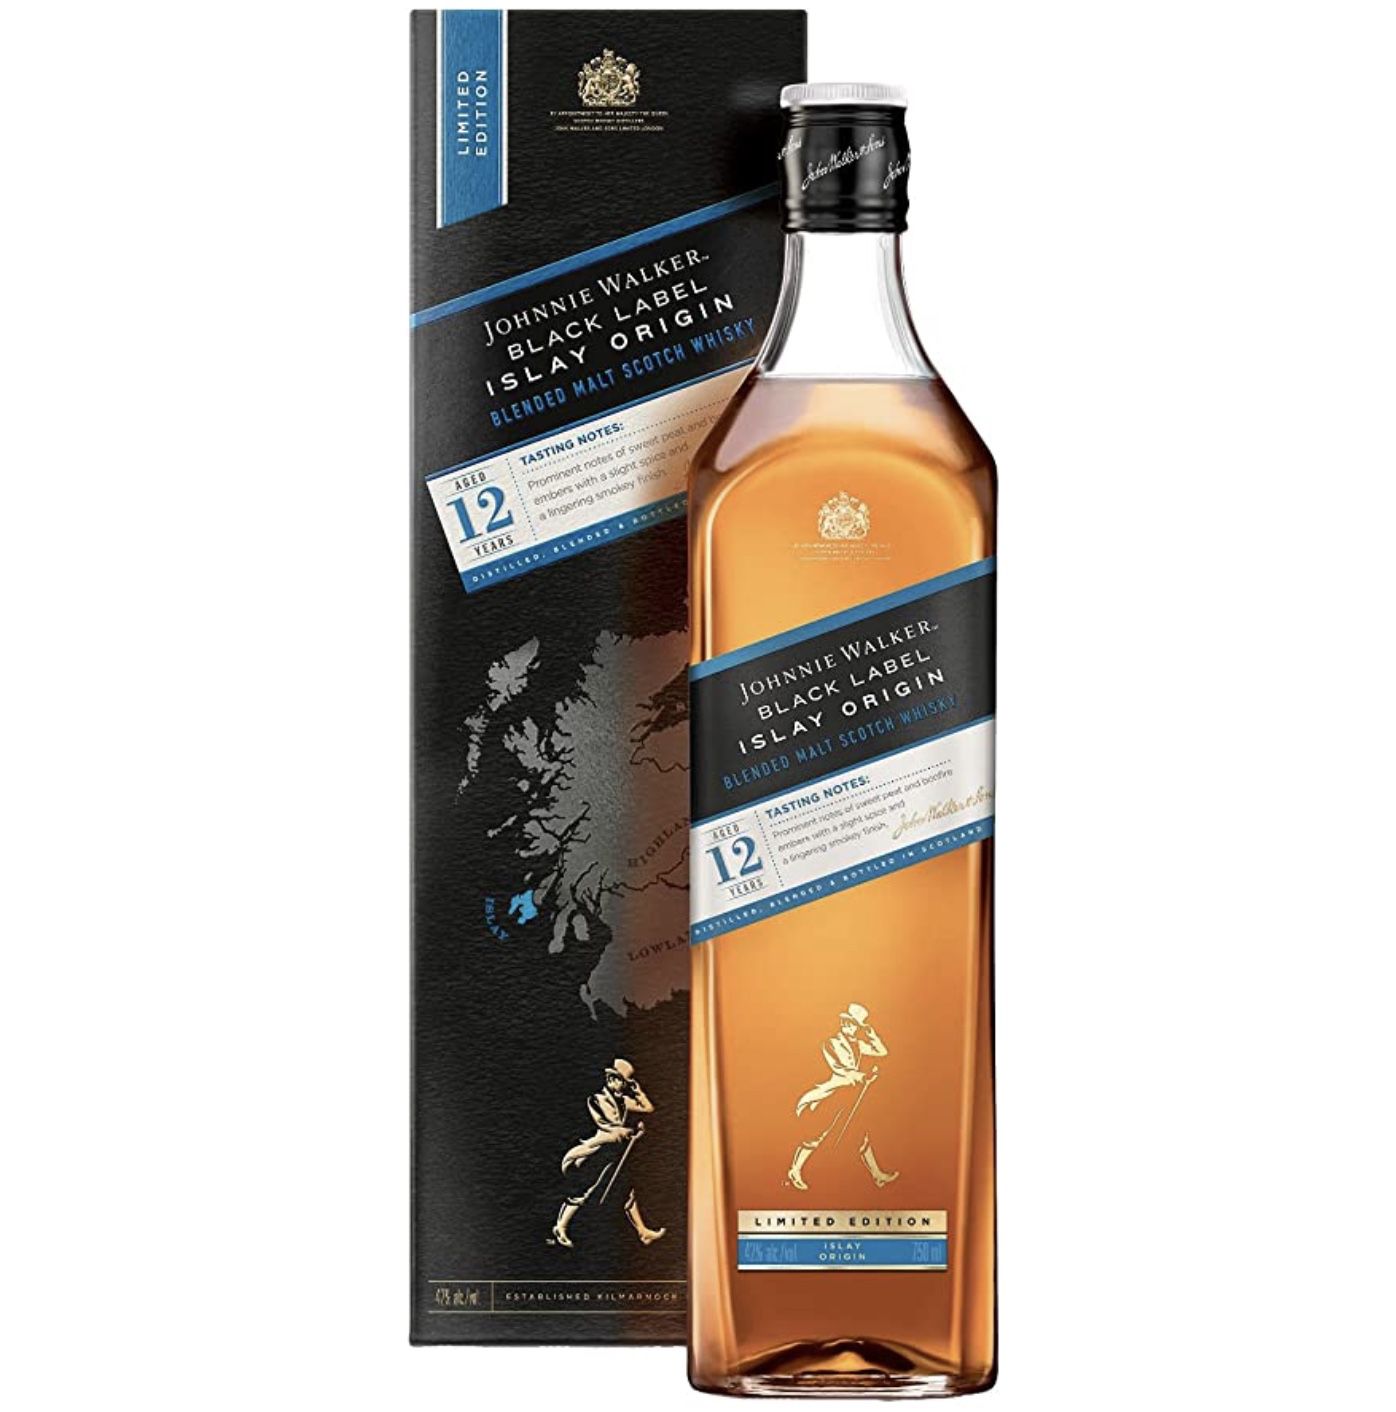 Johnnie Walker Black Label 12 Years Old Islay Origin LE Blended Malt Scotch Whisky für 20,60€ (statt 32€)   Prime